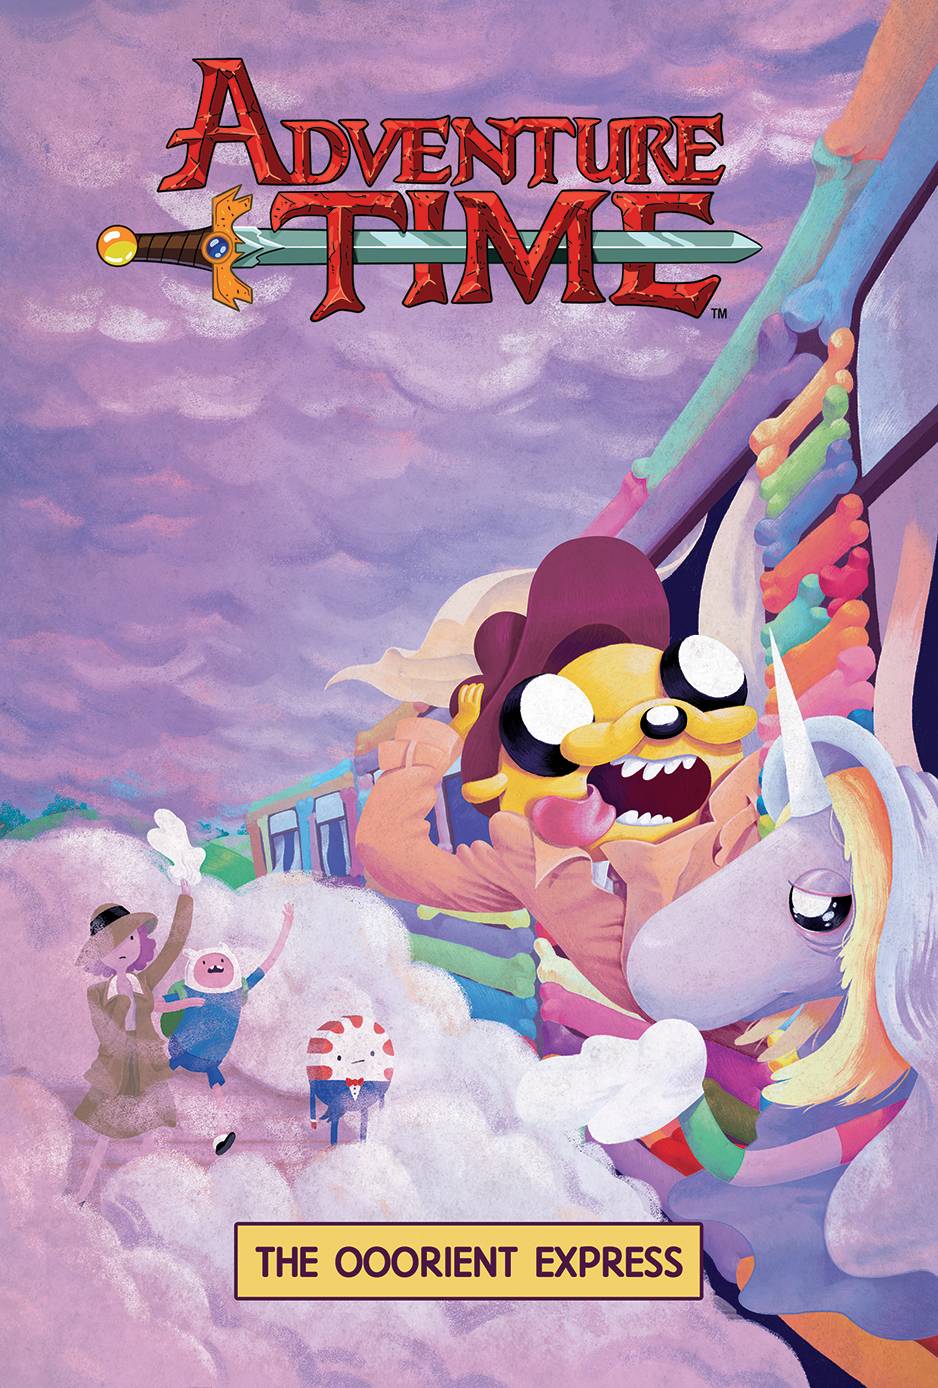 Adventure Time Original Graphic Novel Volume 10.1 Ooorient Express